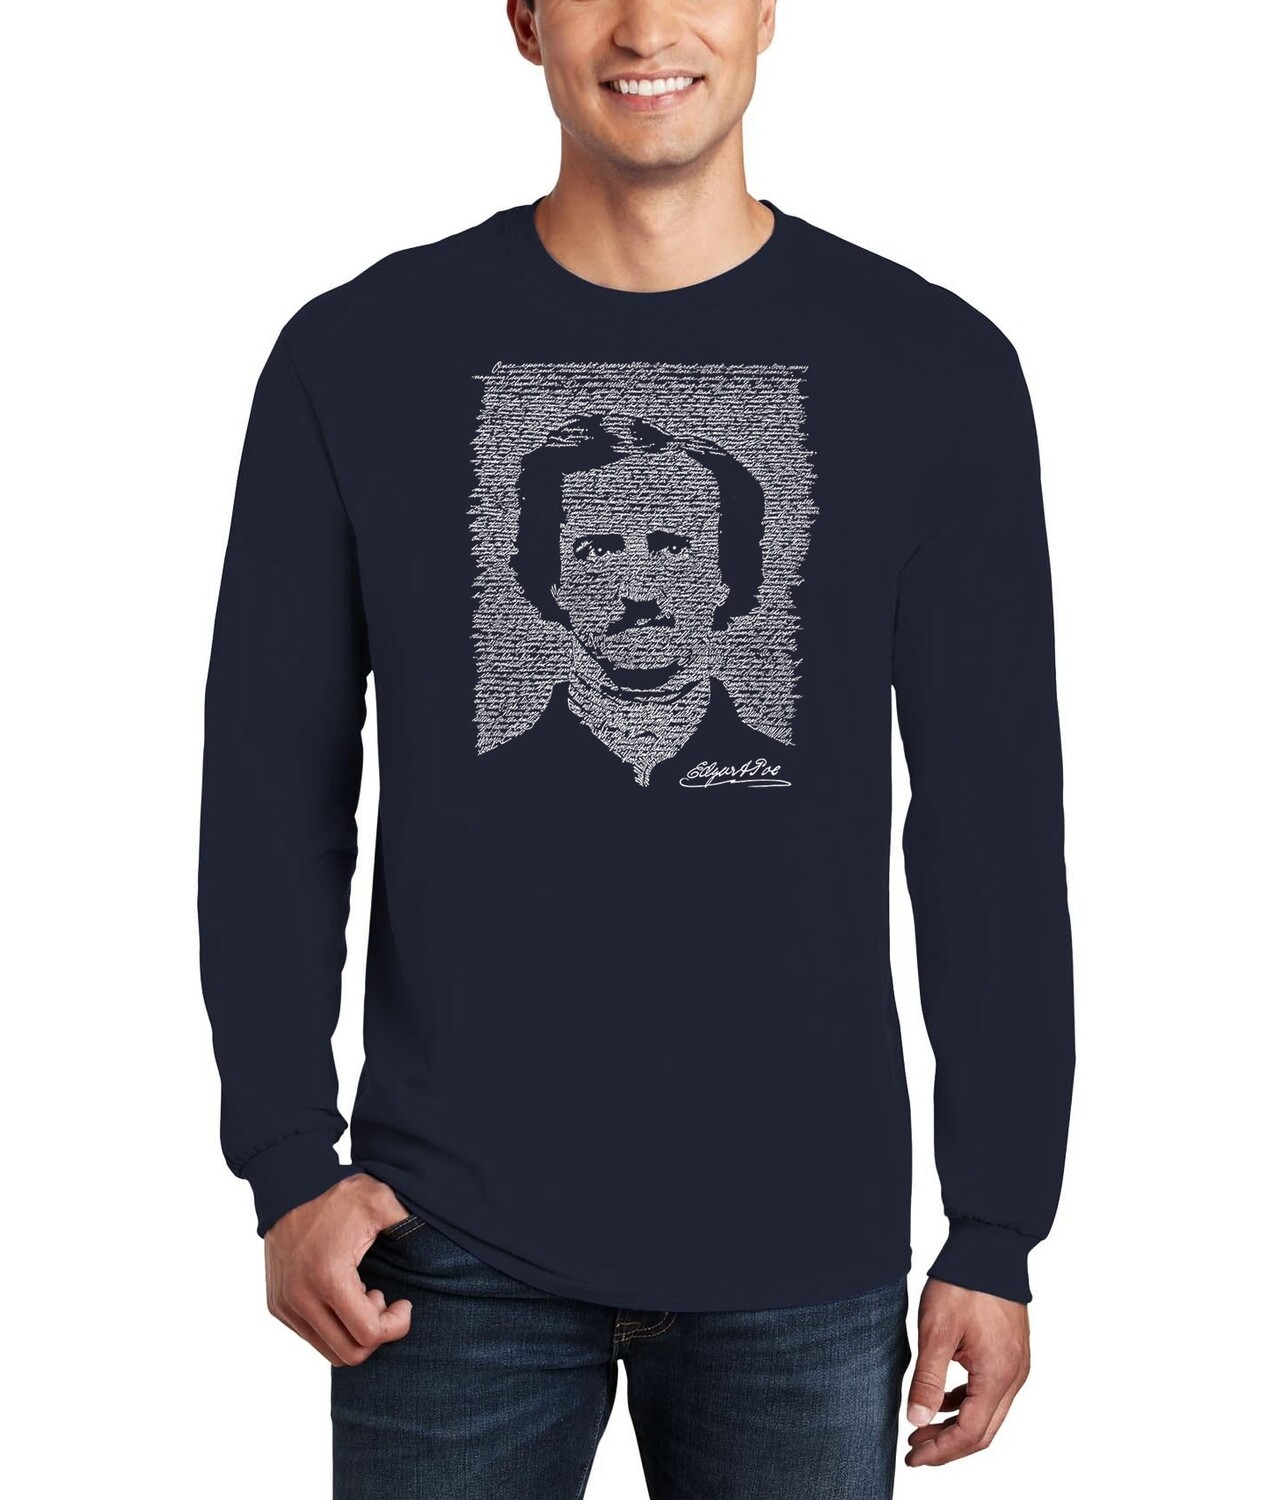 Poe Word Art Long-Sleeved T-shirt